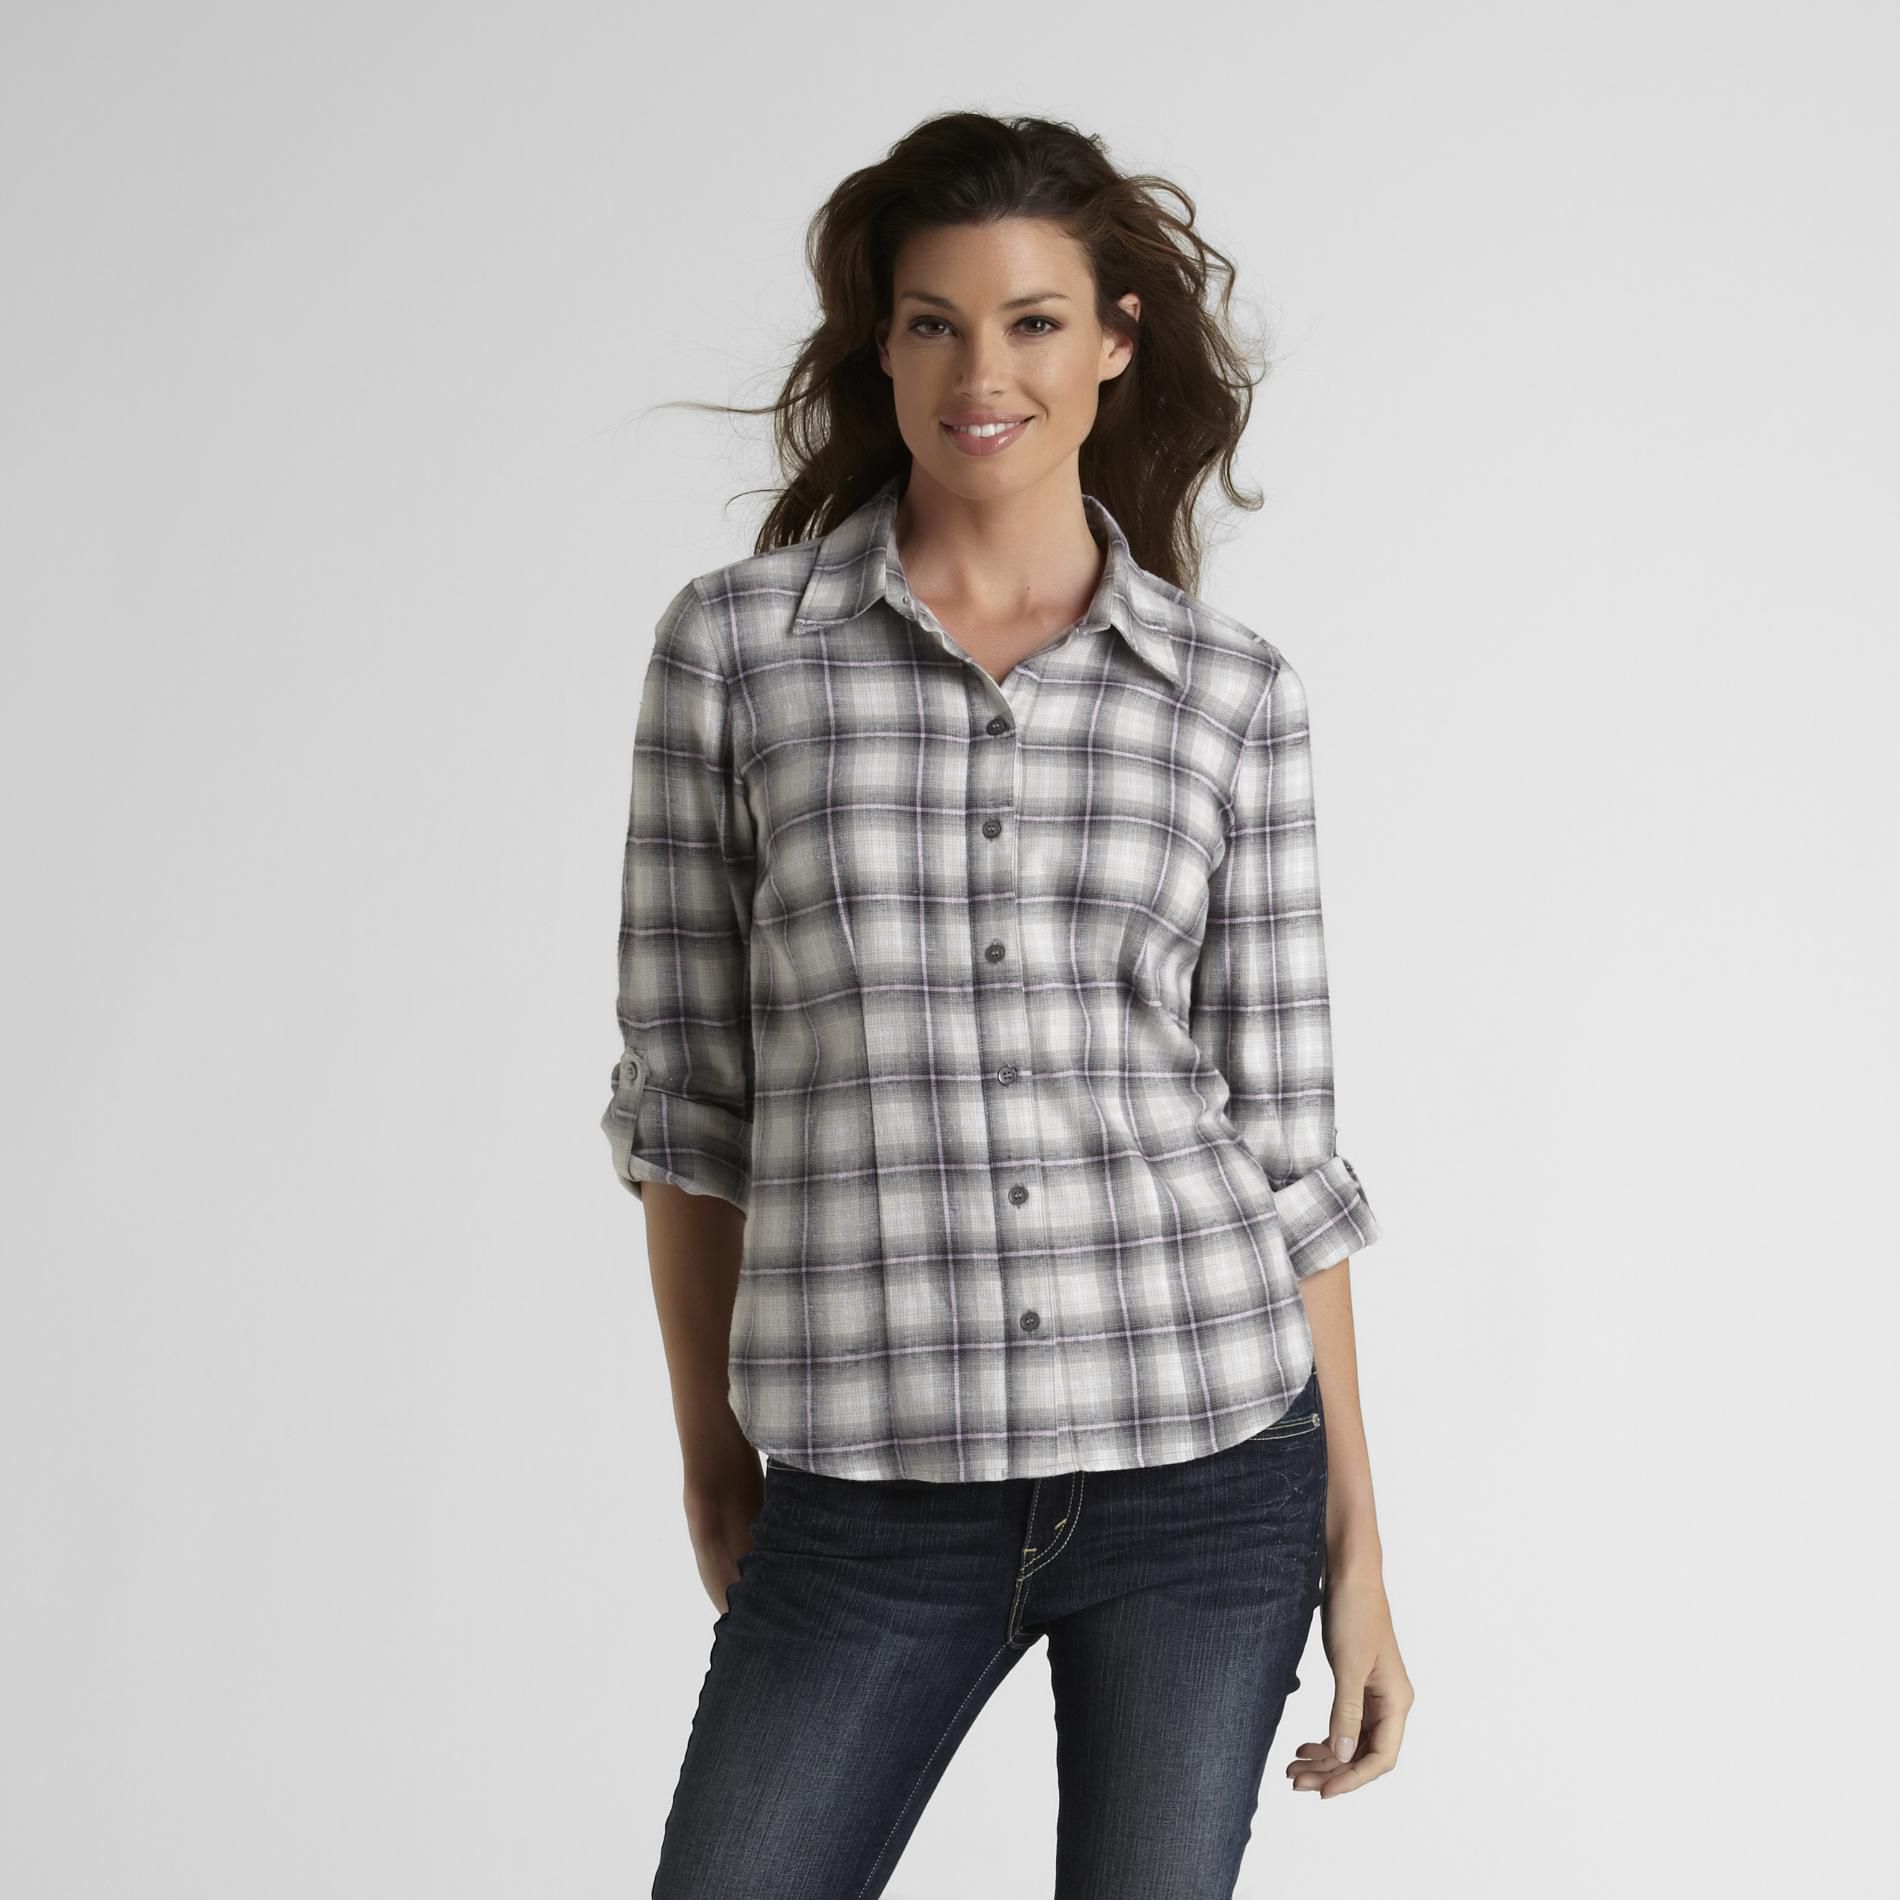 Basic Editions Women's Roll-Tab Flannel Shirt